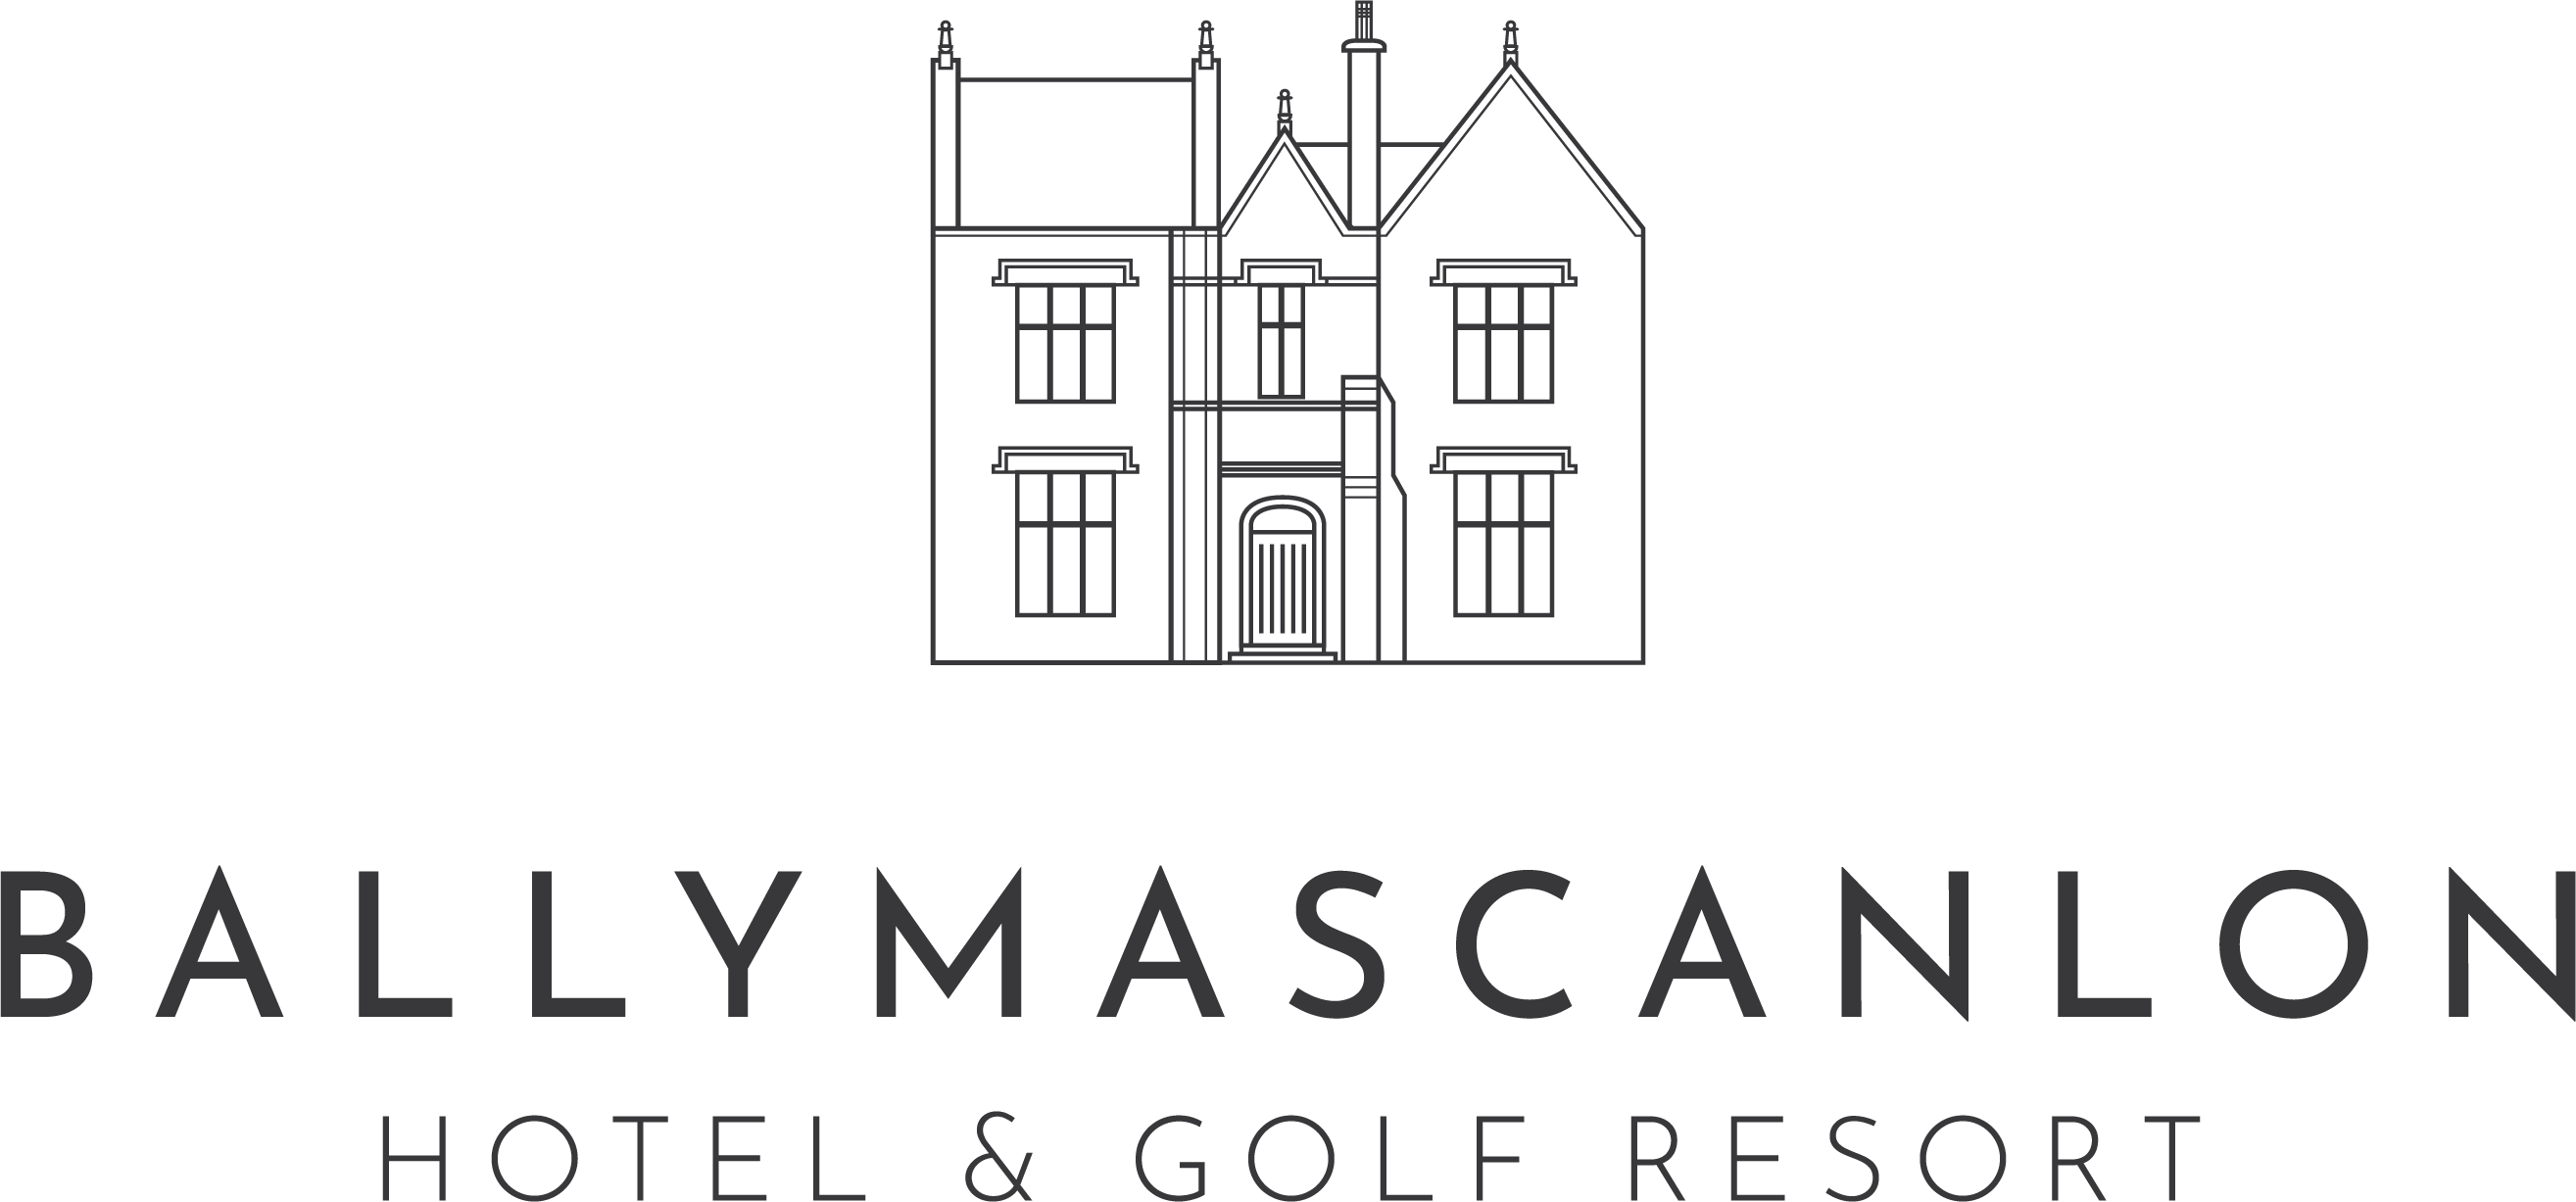 Logo for Ballymascanlon House Hotel